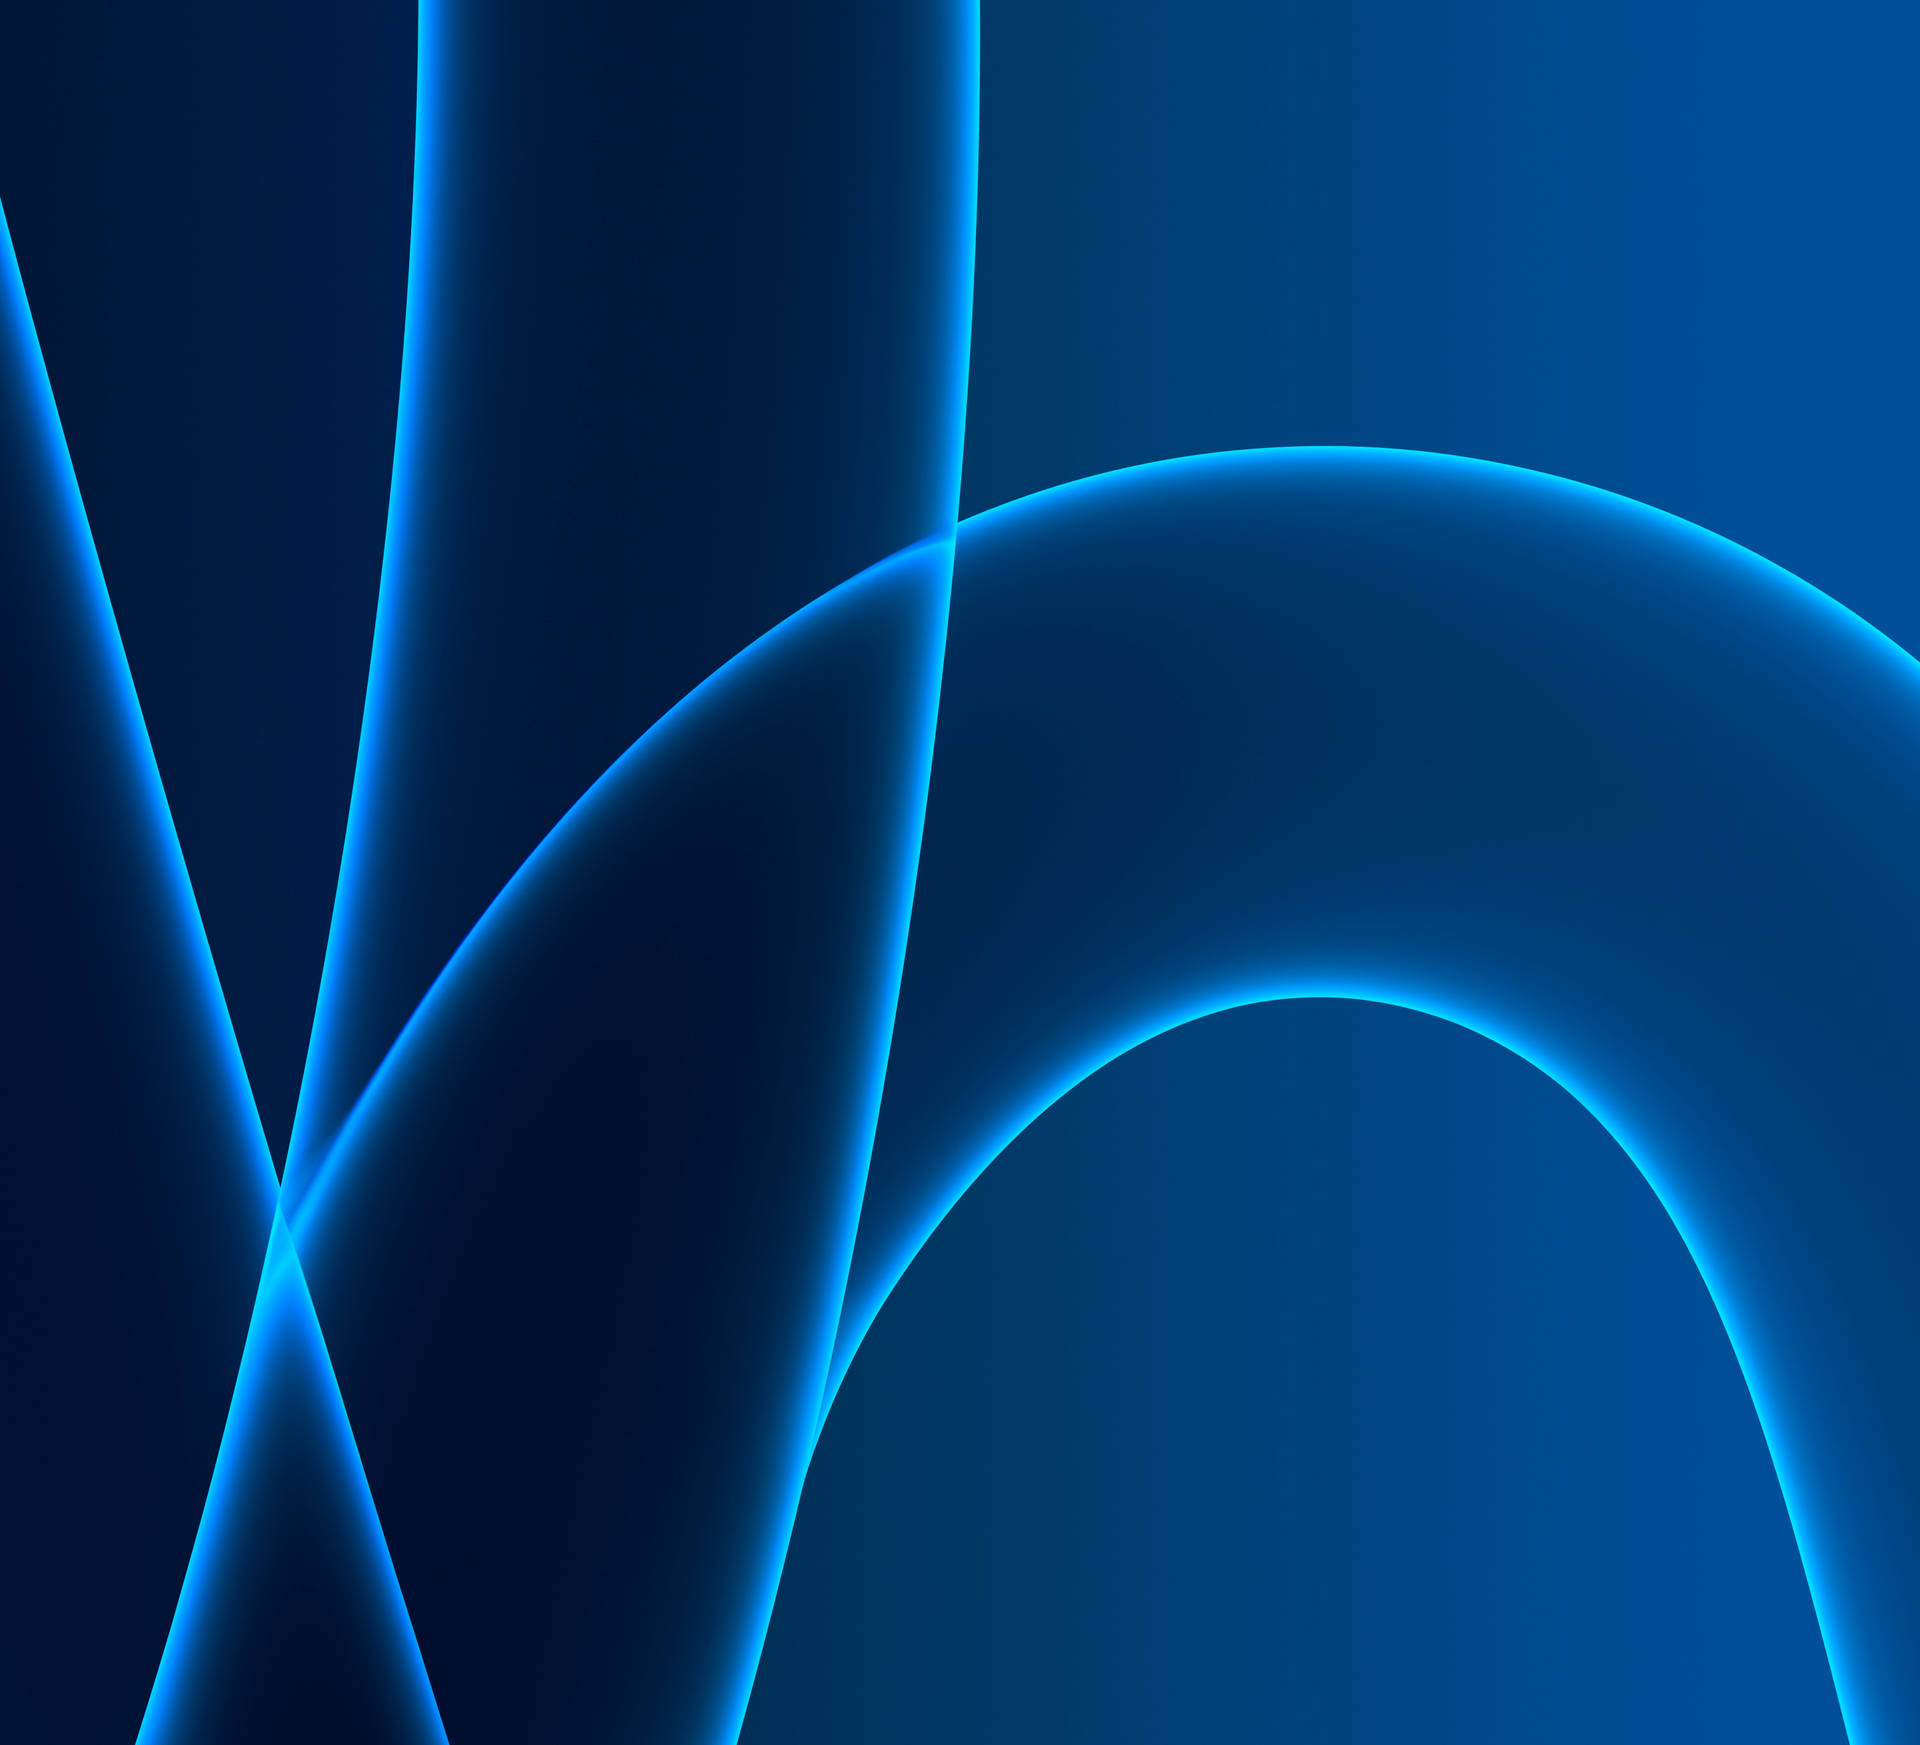 Neon Blue Lines iMac 4K Wallpaper